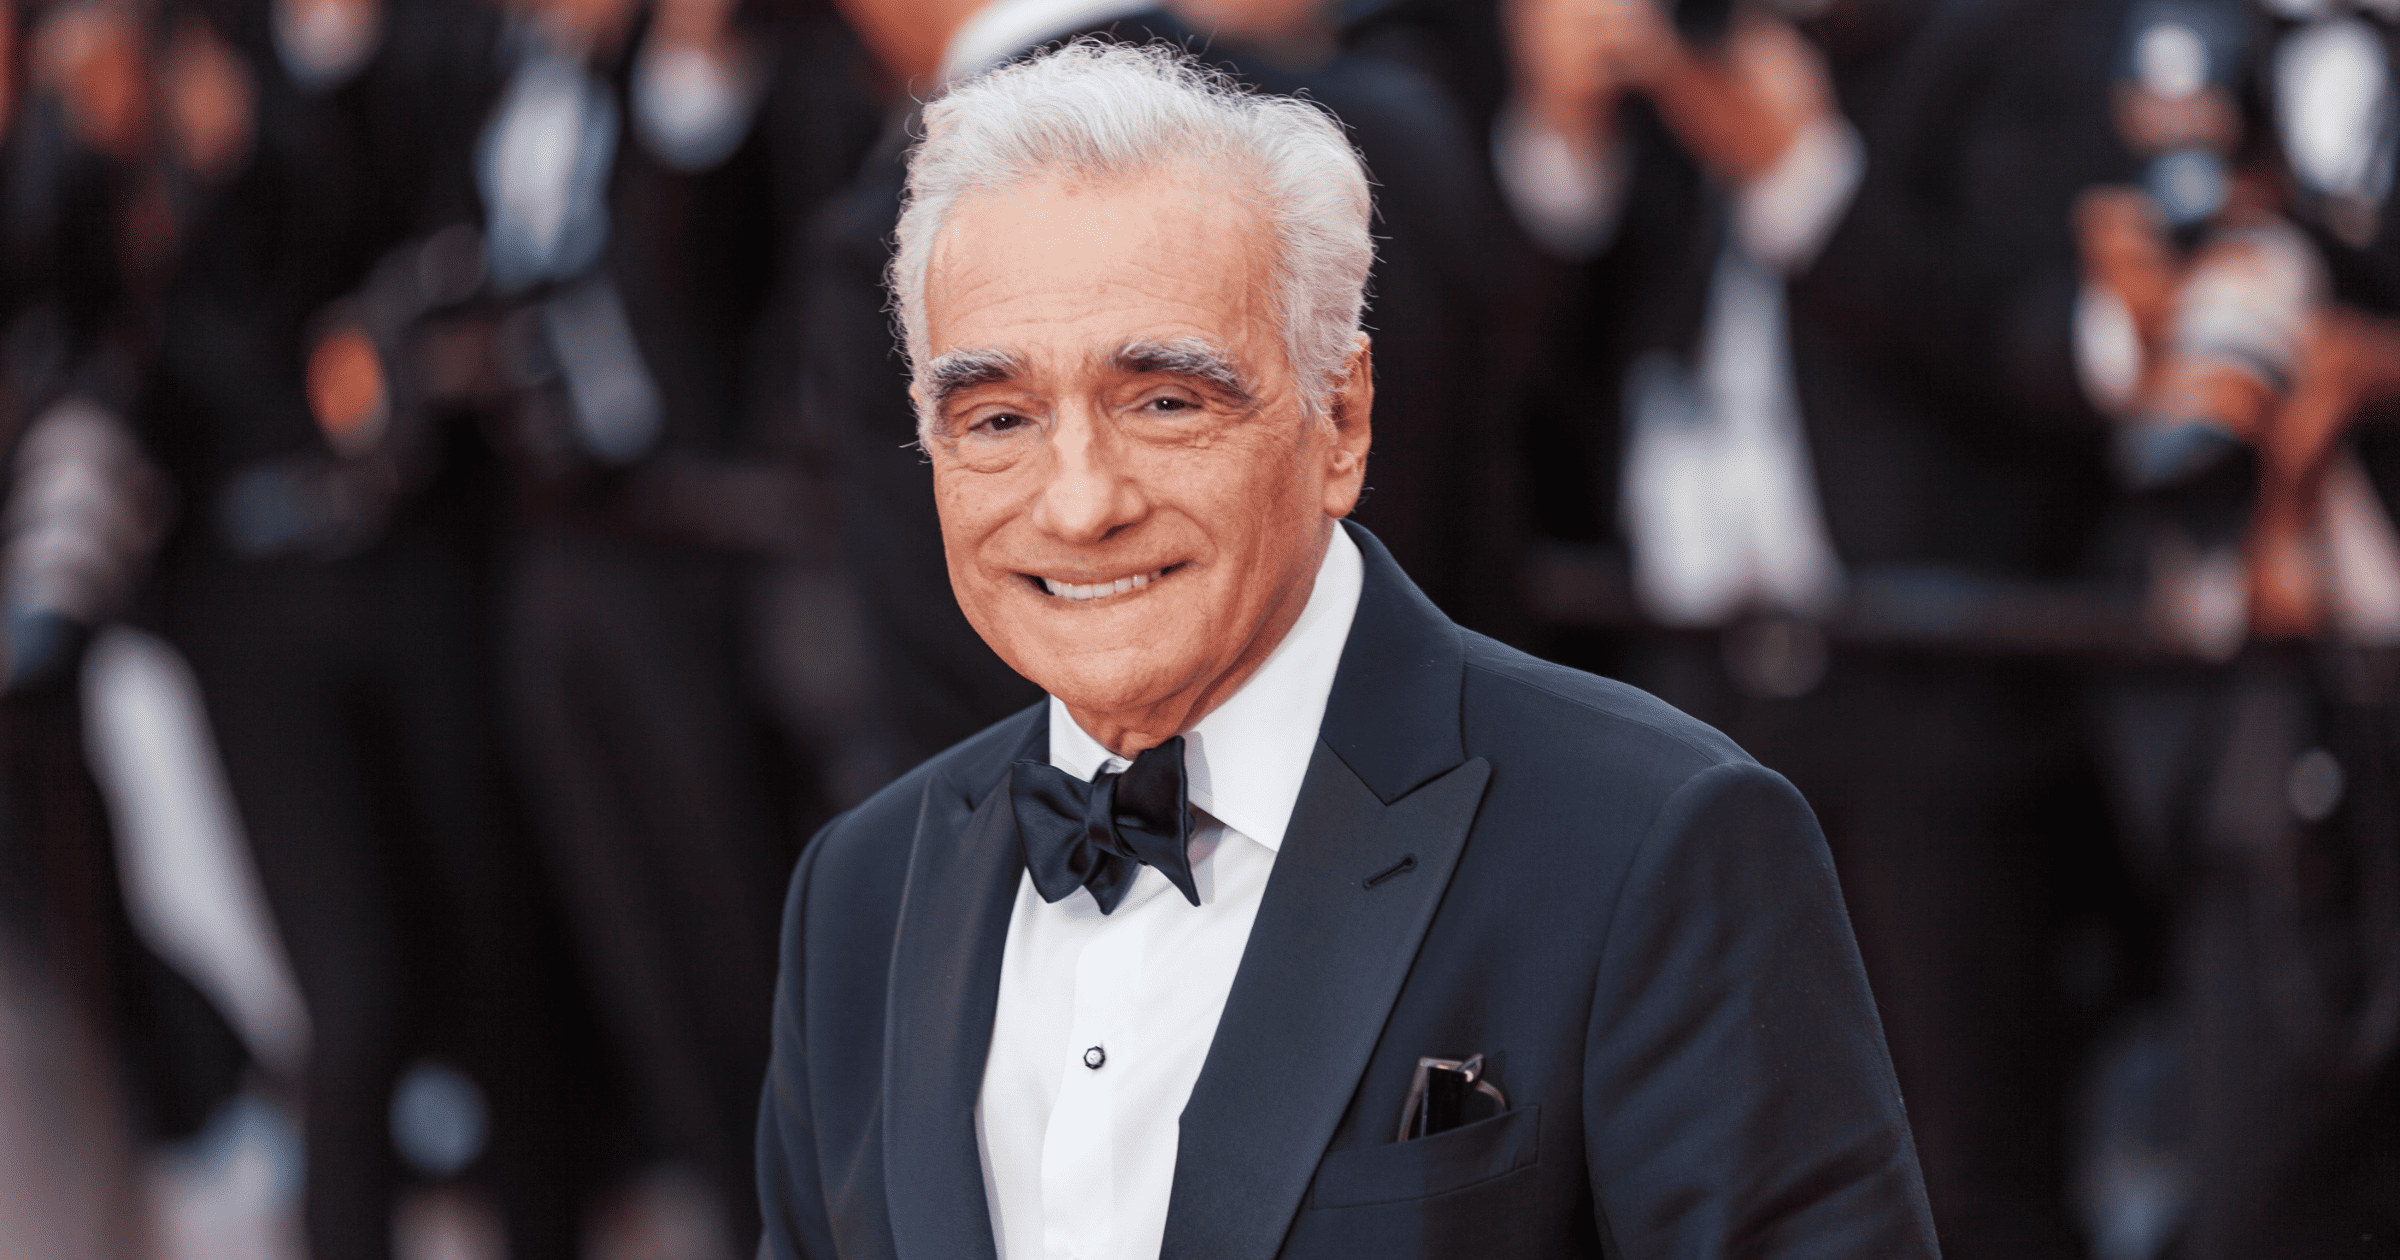 Martin Scorsese Apple Original Film ‘Killers of the Flower Moon’ Adds Four Cast Members Alongside Leonardo DiCaprio and Robert De Niro